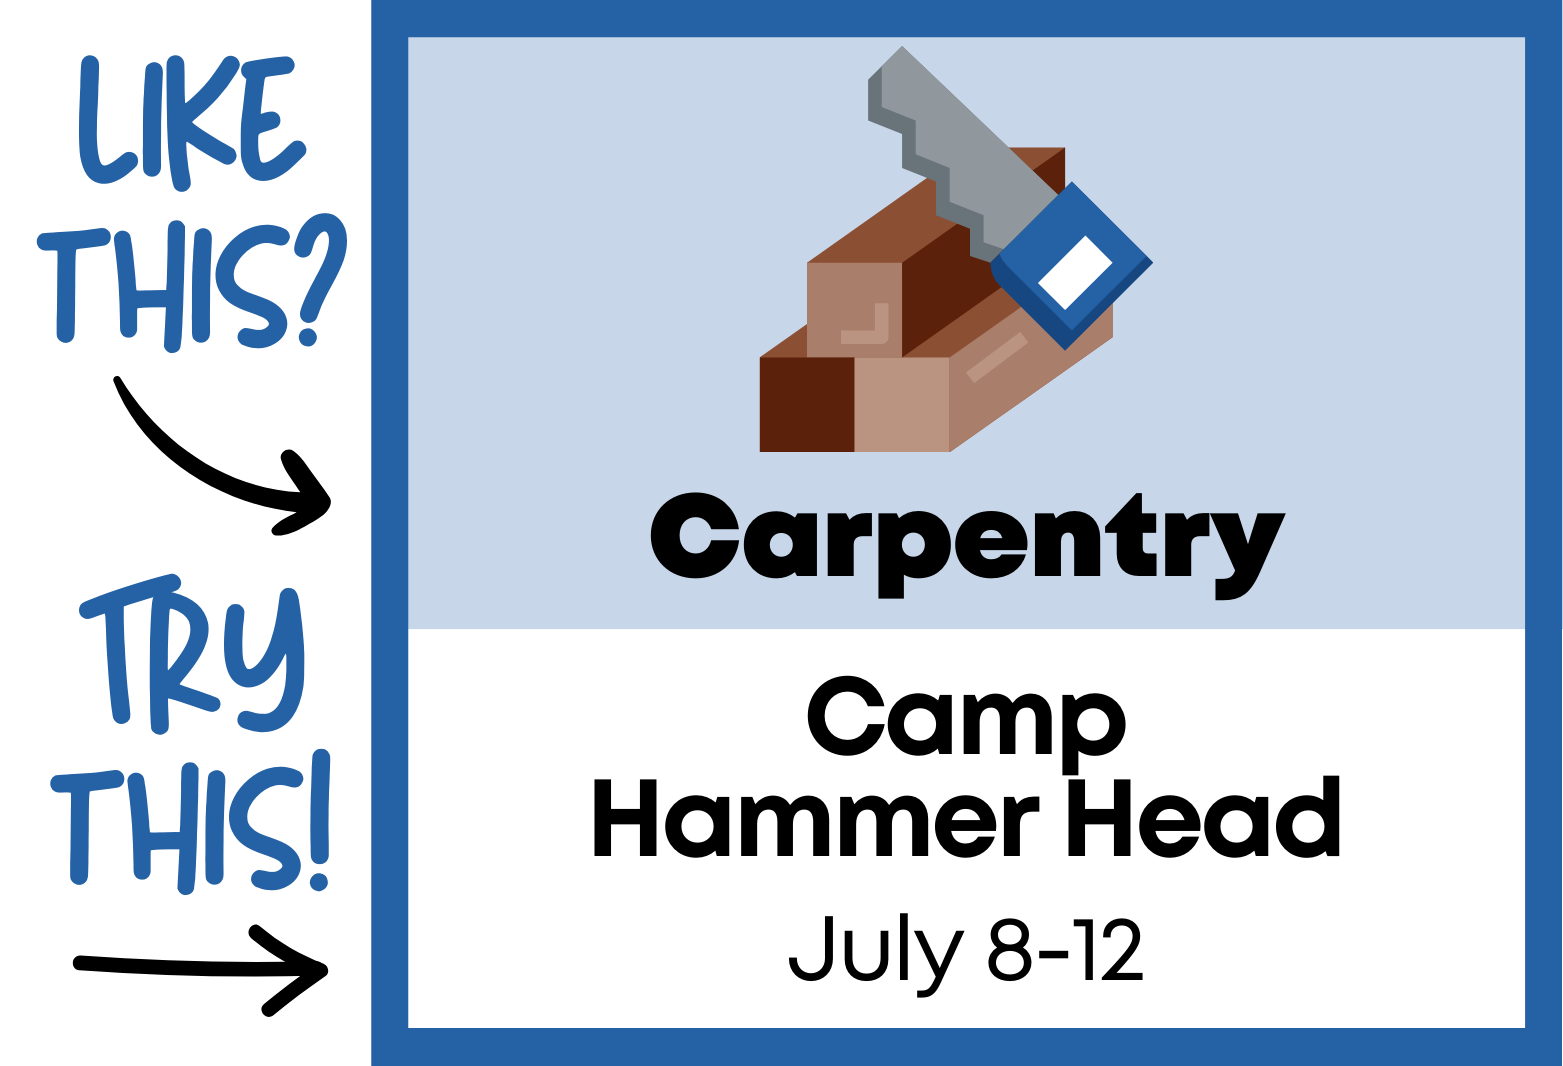 Camp Hammer Head, July 8-12